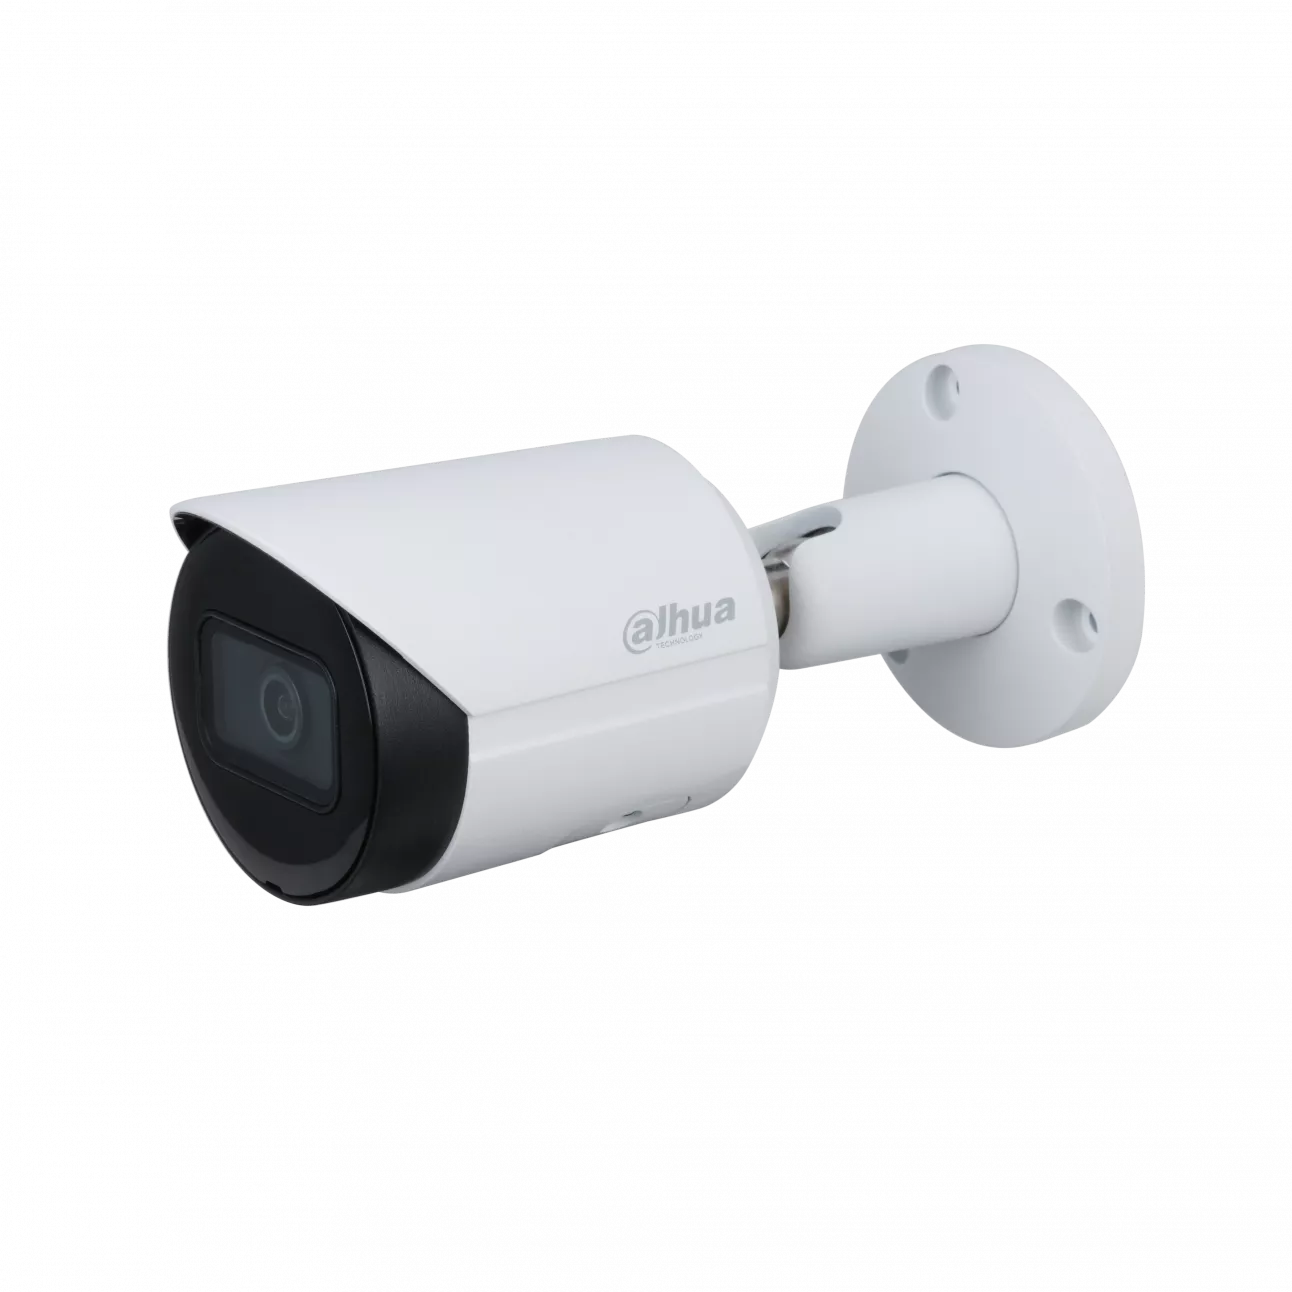 IP камера Dahua DH-IPC-HFW2230SP-S-0280B уличная цилиндрическая 2Мп, фикс.объектив 2.8мм, DWDR, MicroSD, ИК до 30м, DC12B/PoE, IP67